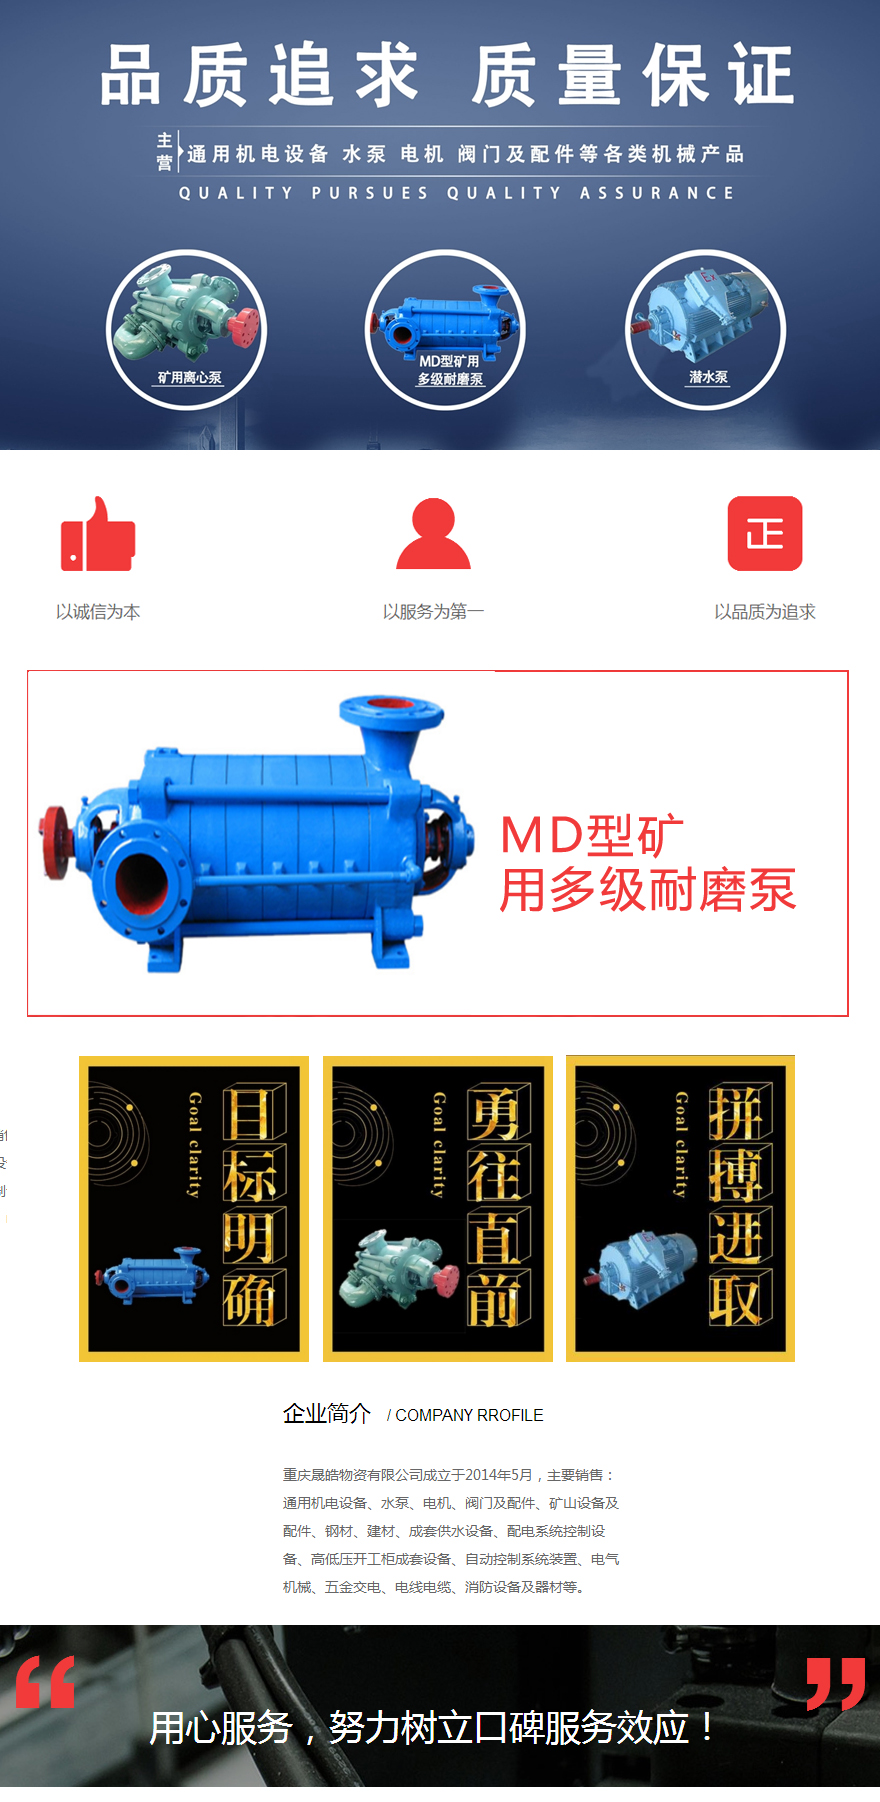 MD型矿用多级耐磨泵副本